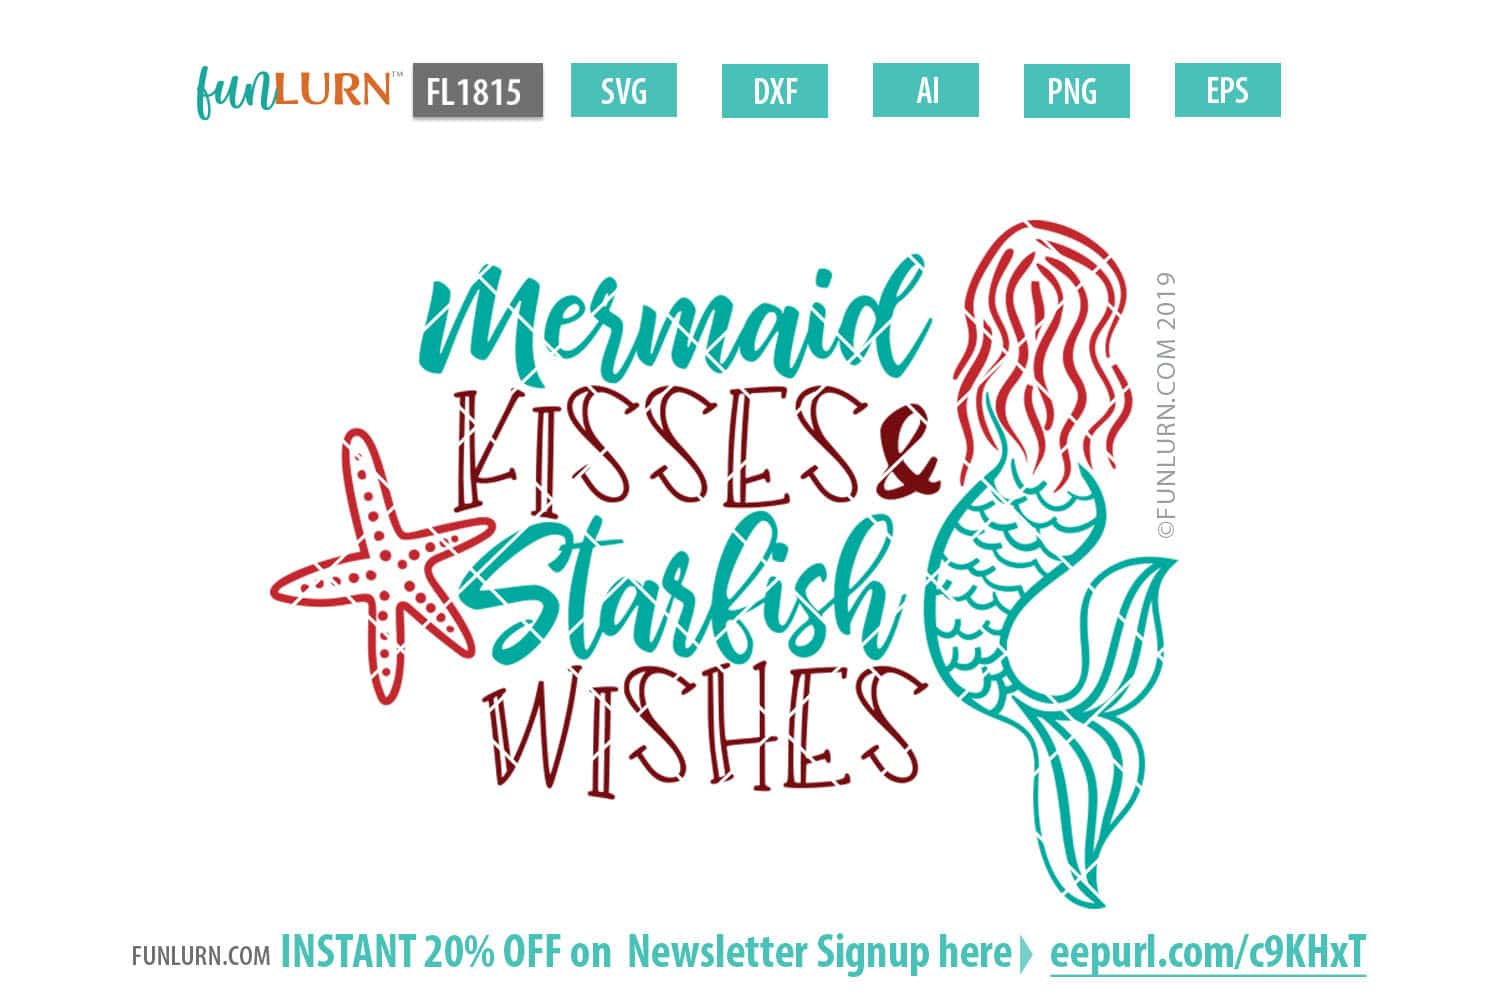 Mermaid Kisses and Starfish wishes FunLurn